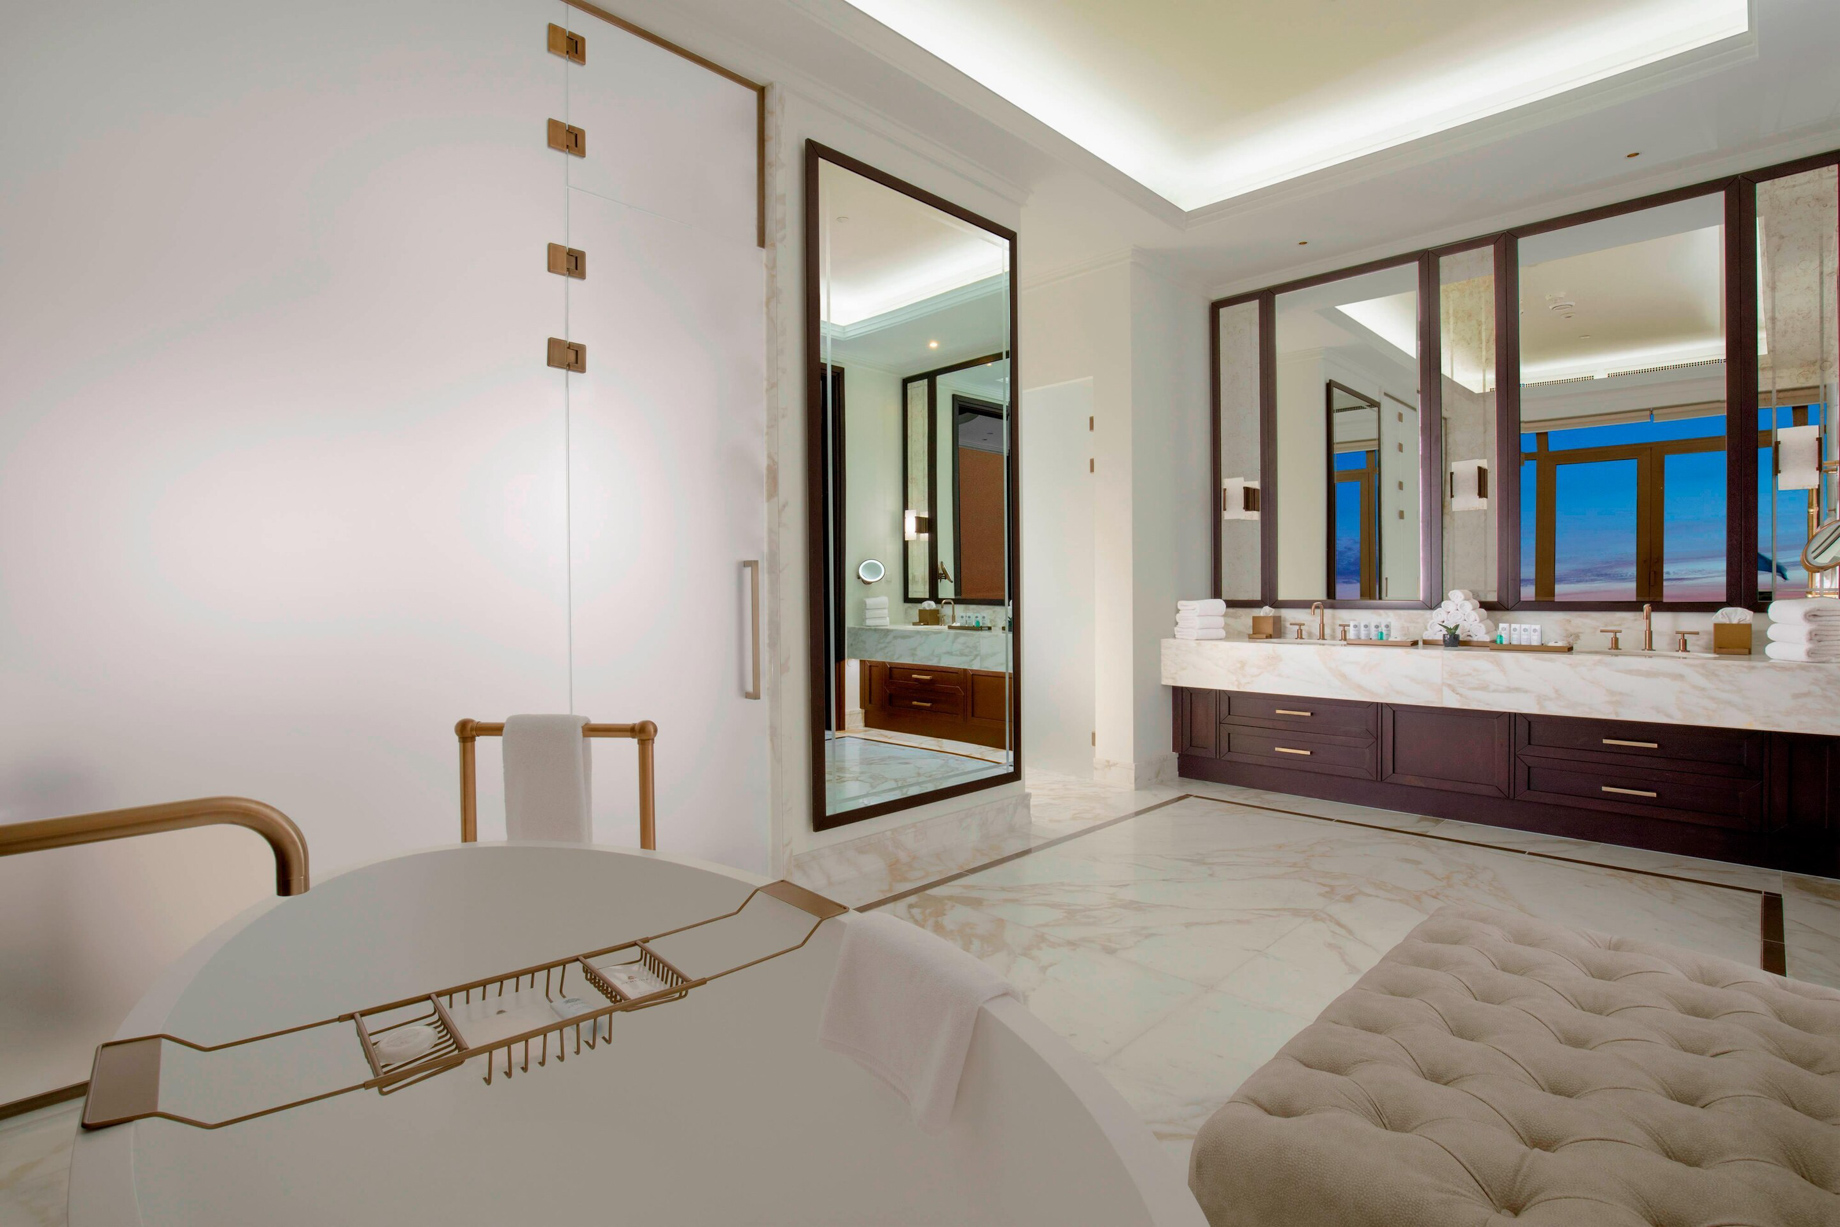 The St. Regis Astana Hotel – Astana, Kazakhstan – Presidential Suite Bathroom Separate Tub and Shower